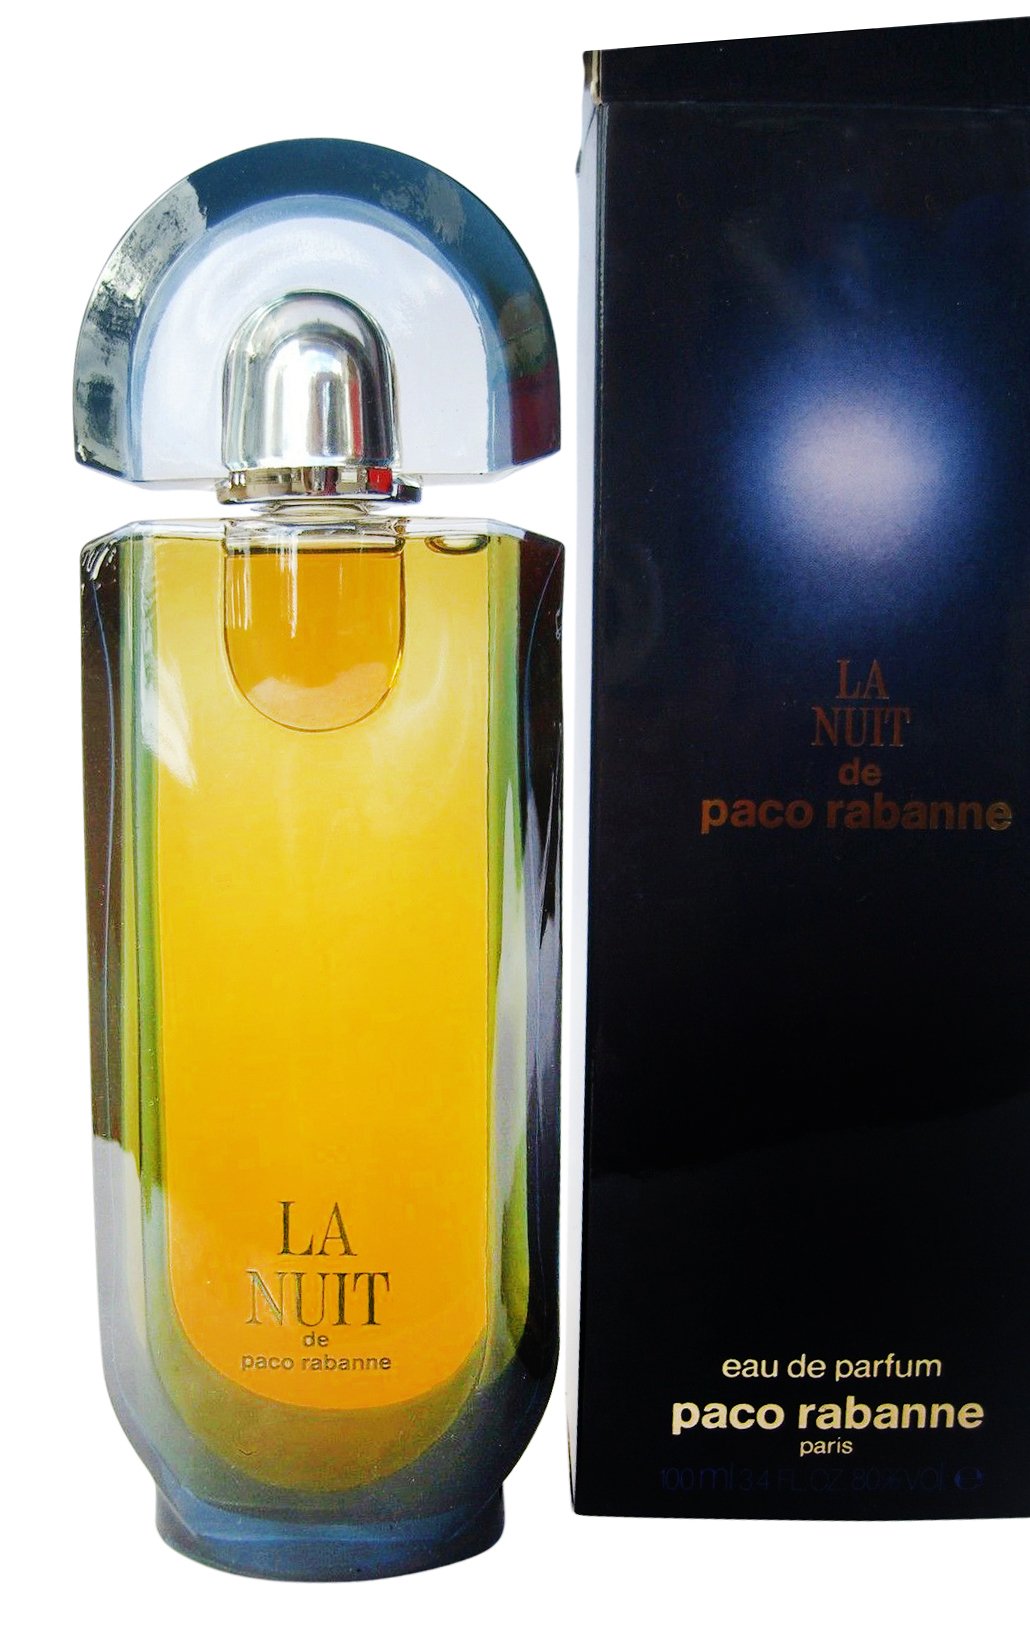 Parfum Paco Rabanne - Homecare24